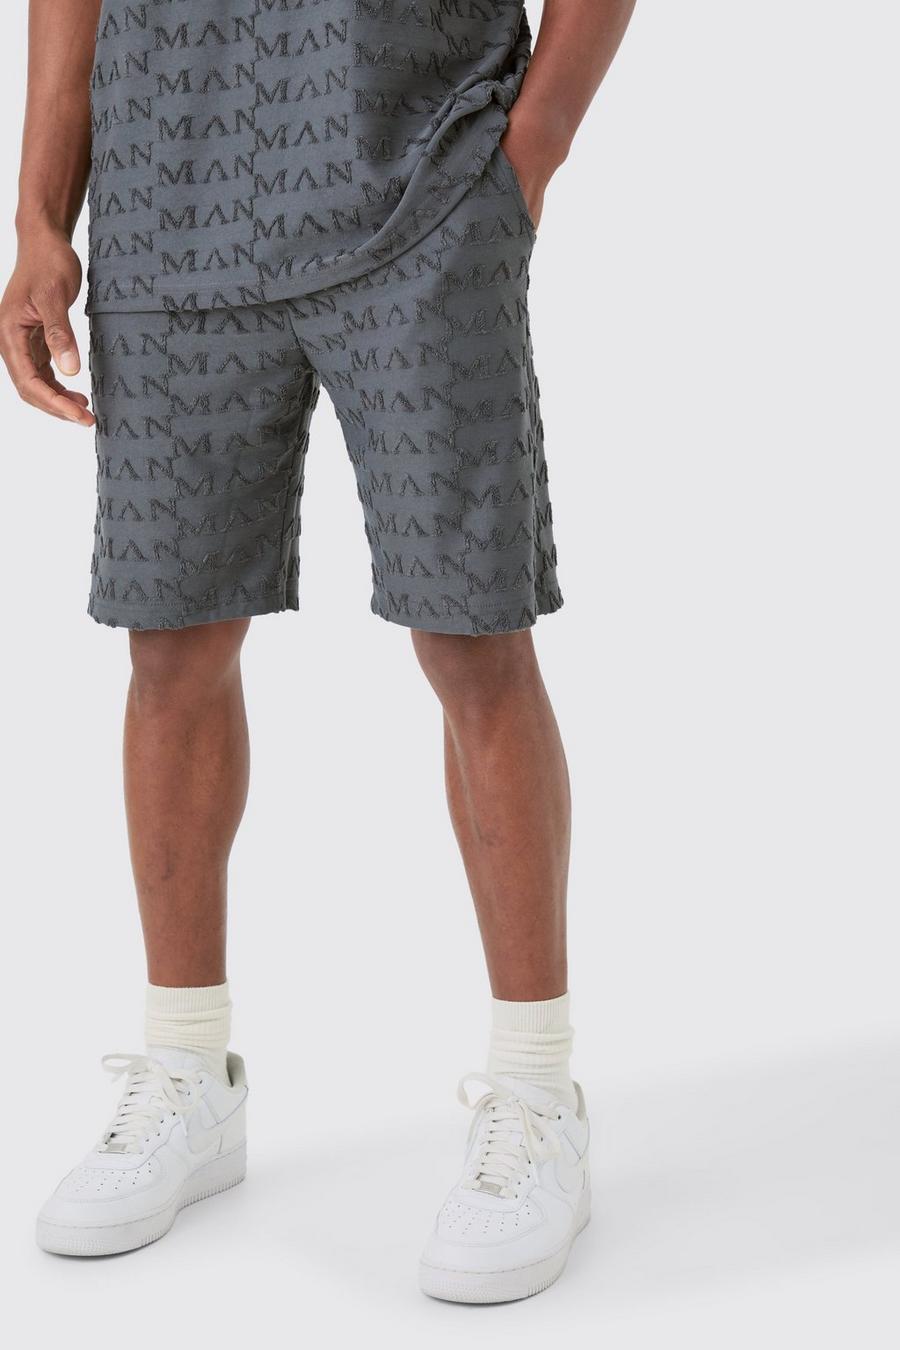 Lockere Man Frottee Jacquard Shorts, Charcoal